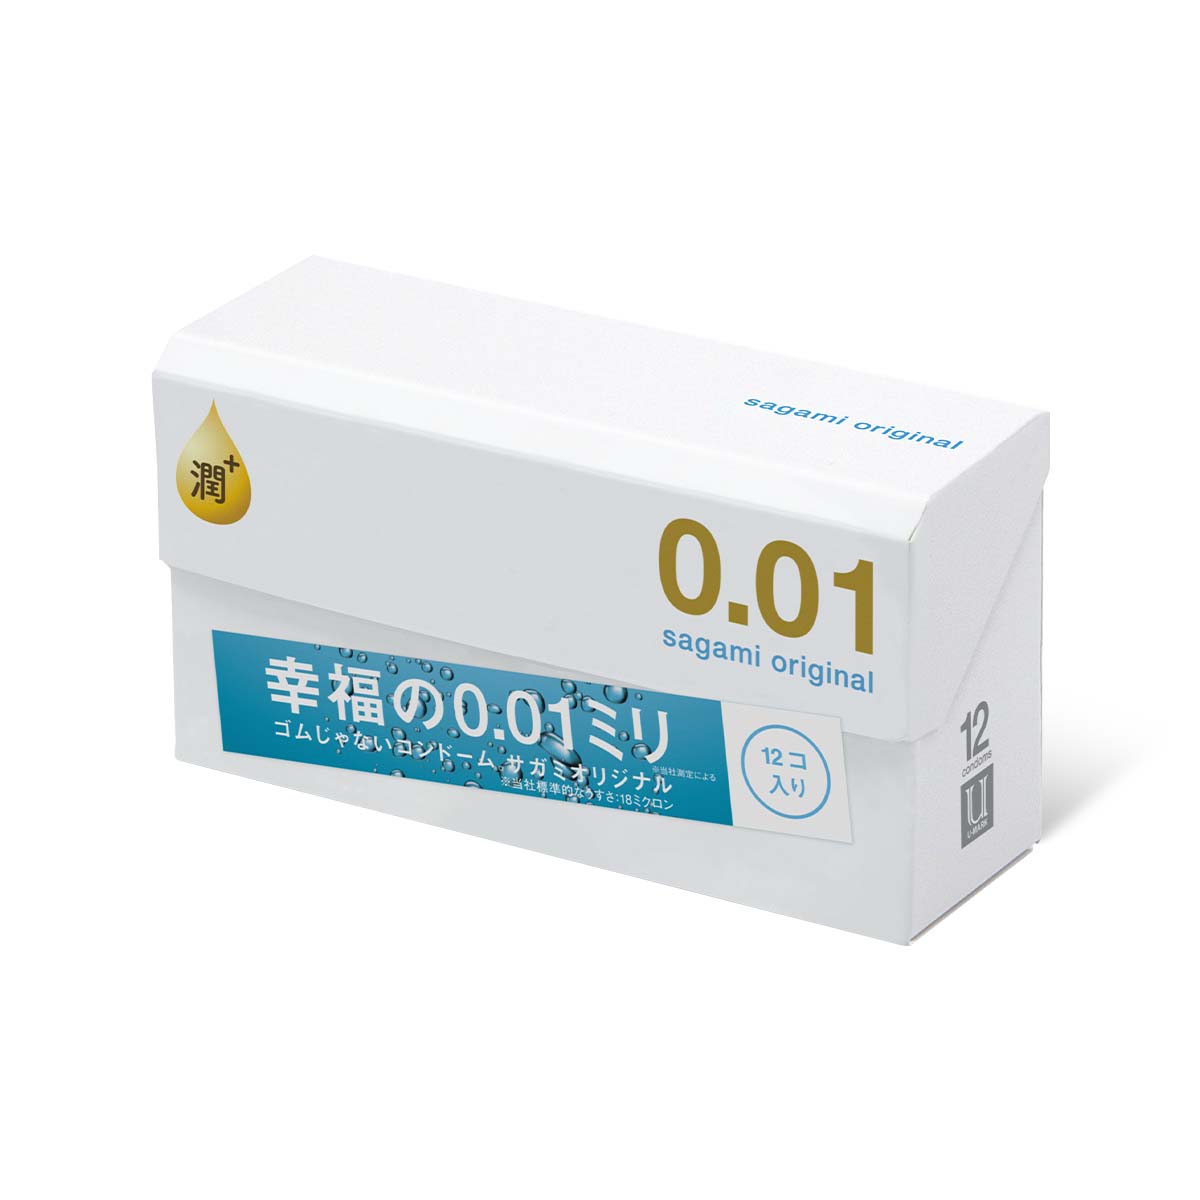 Sagami Original 0.01 Extra Lubricated 12's Pack PU Condom-p_1